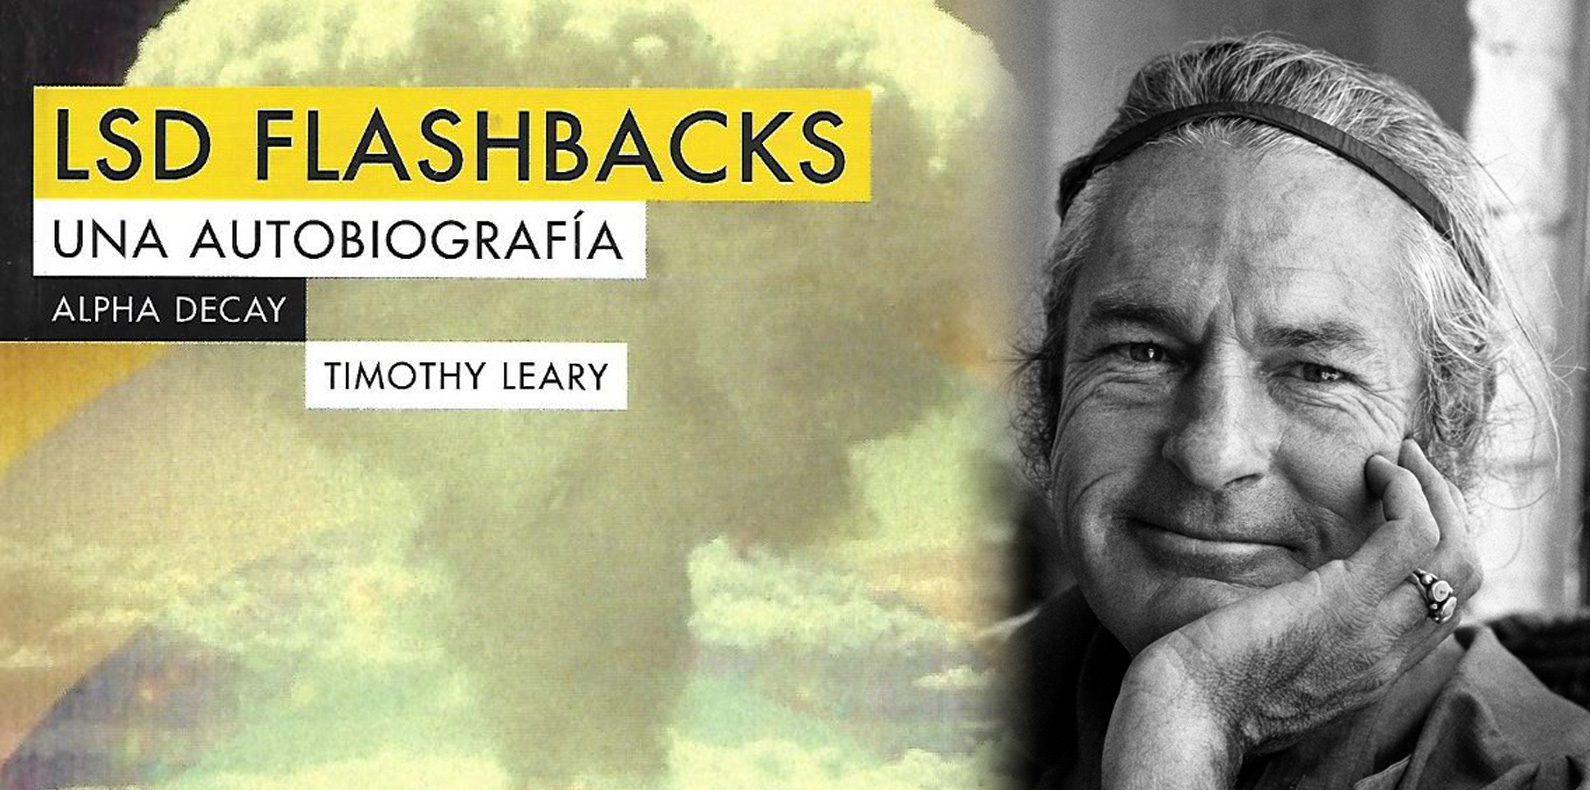 LSD Flashbacks, la autobiografía del Apóstol del LSD, Timothy Leary